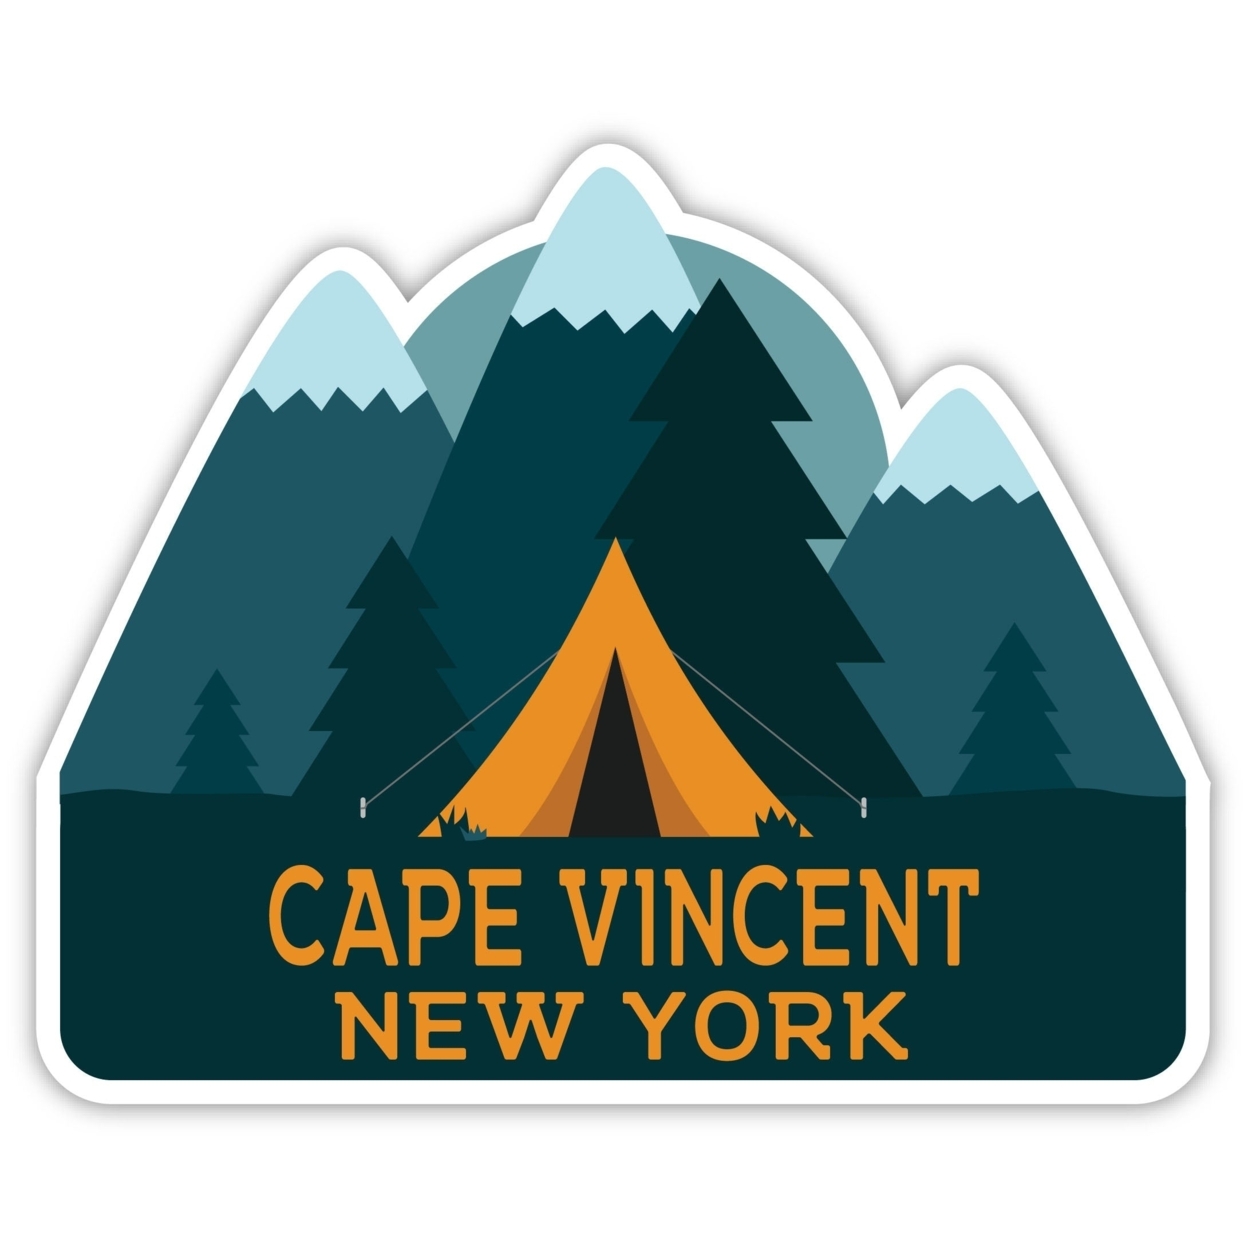 Cape Vincent New York Souvenir Decorative Stickers (Choose Theme And Size) - 4-Pack, 6-Inch, Tent